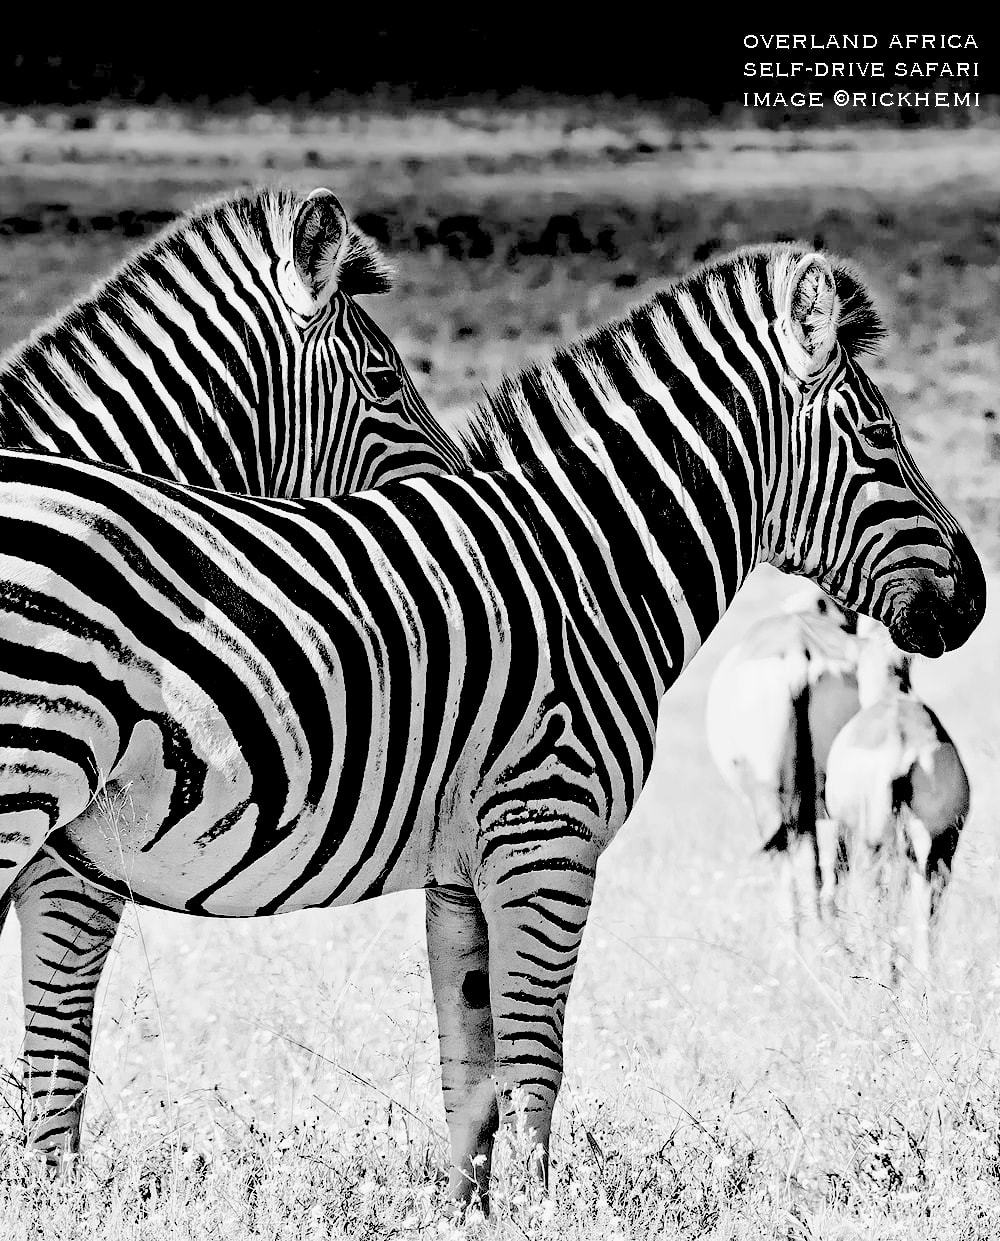 overland travel Africa, wildlife self drive safari image by Rick Hemi